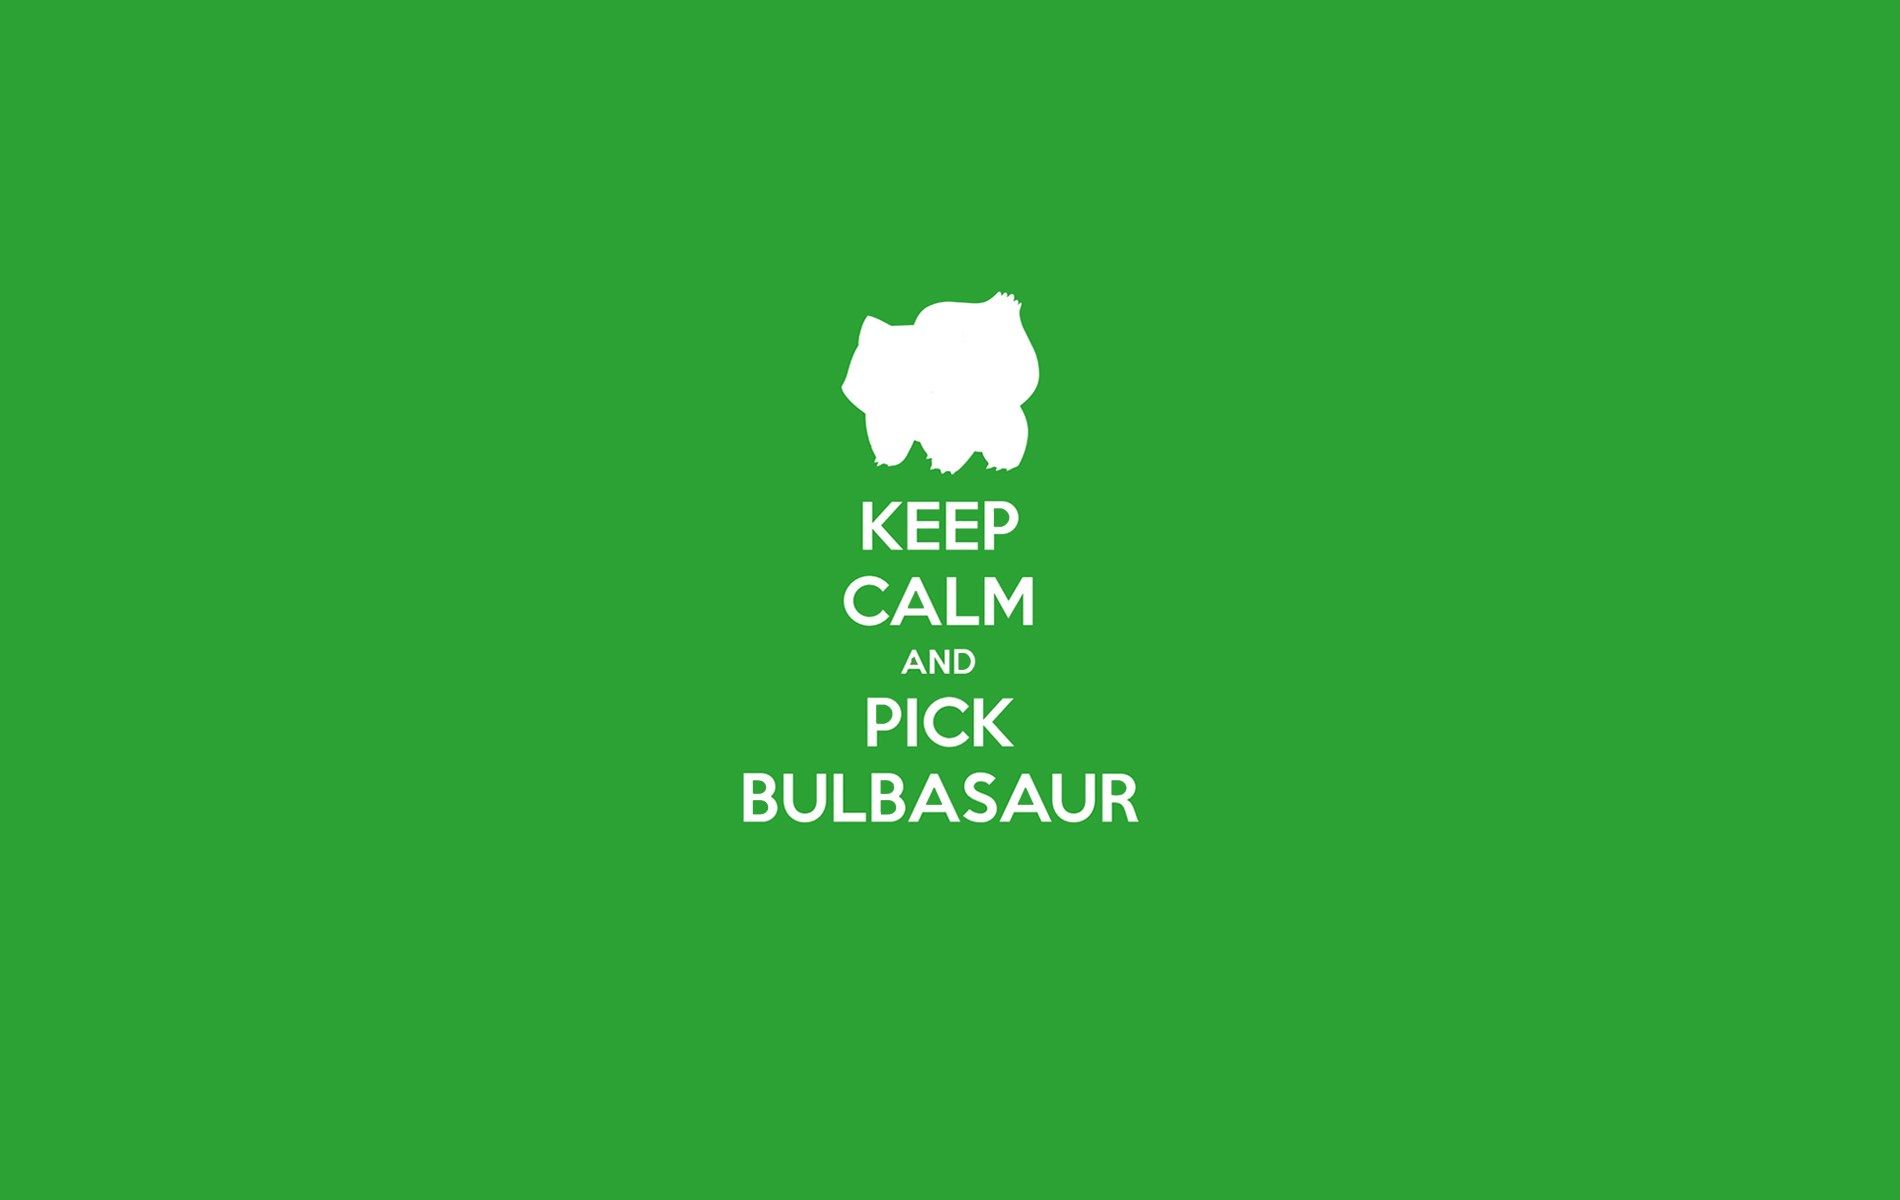 HD wallpaper, Pokemon, Bulbasaur, Calm, Keep, Green